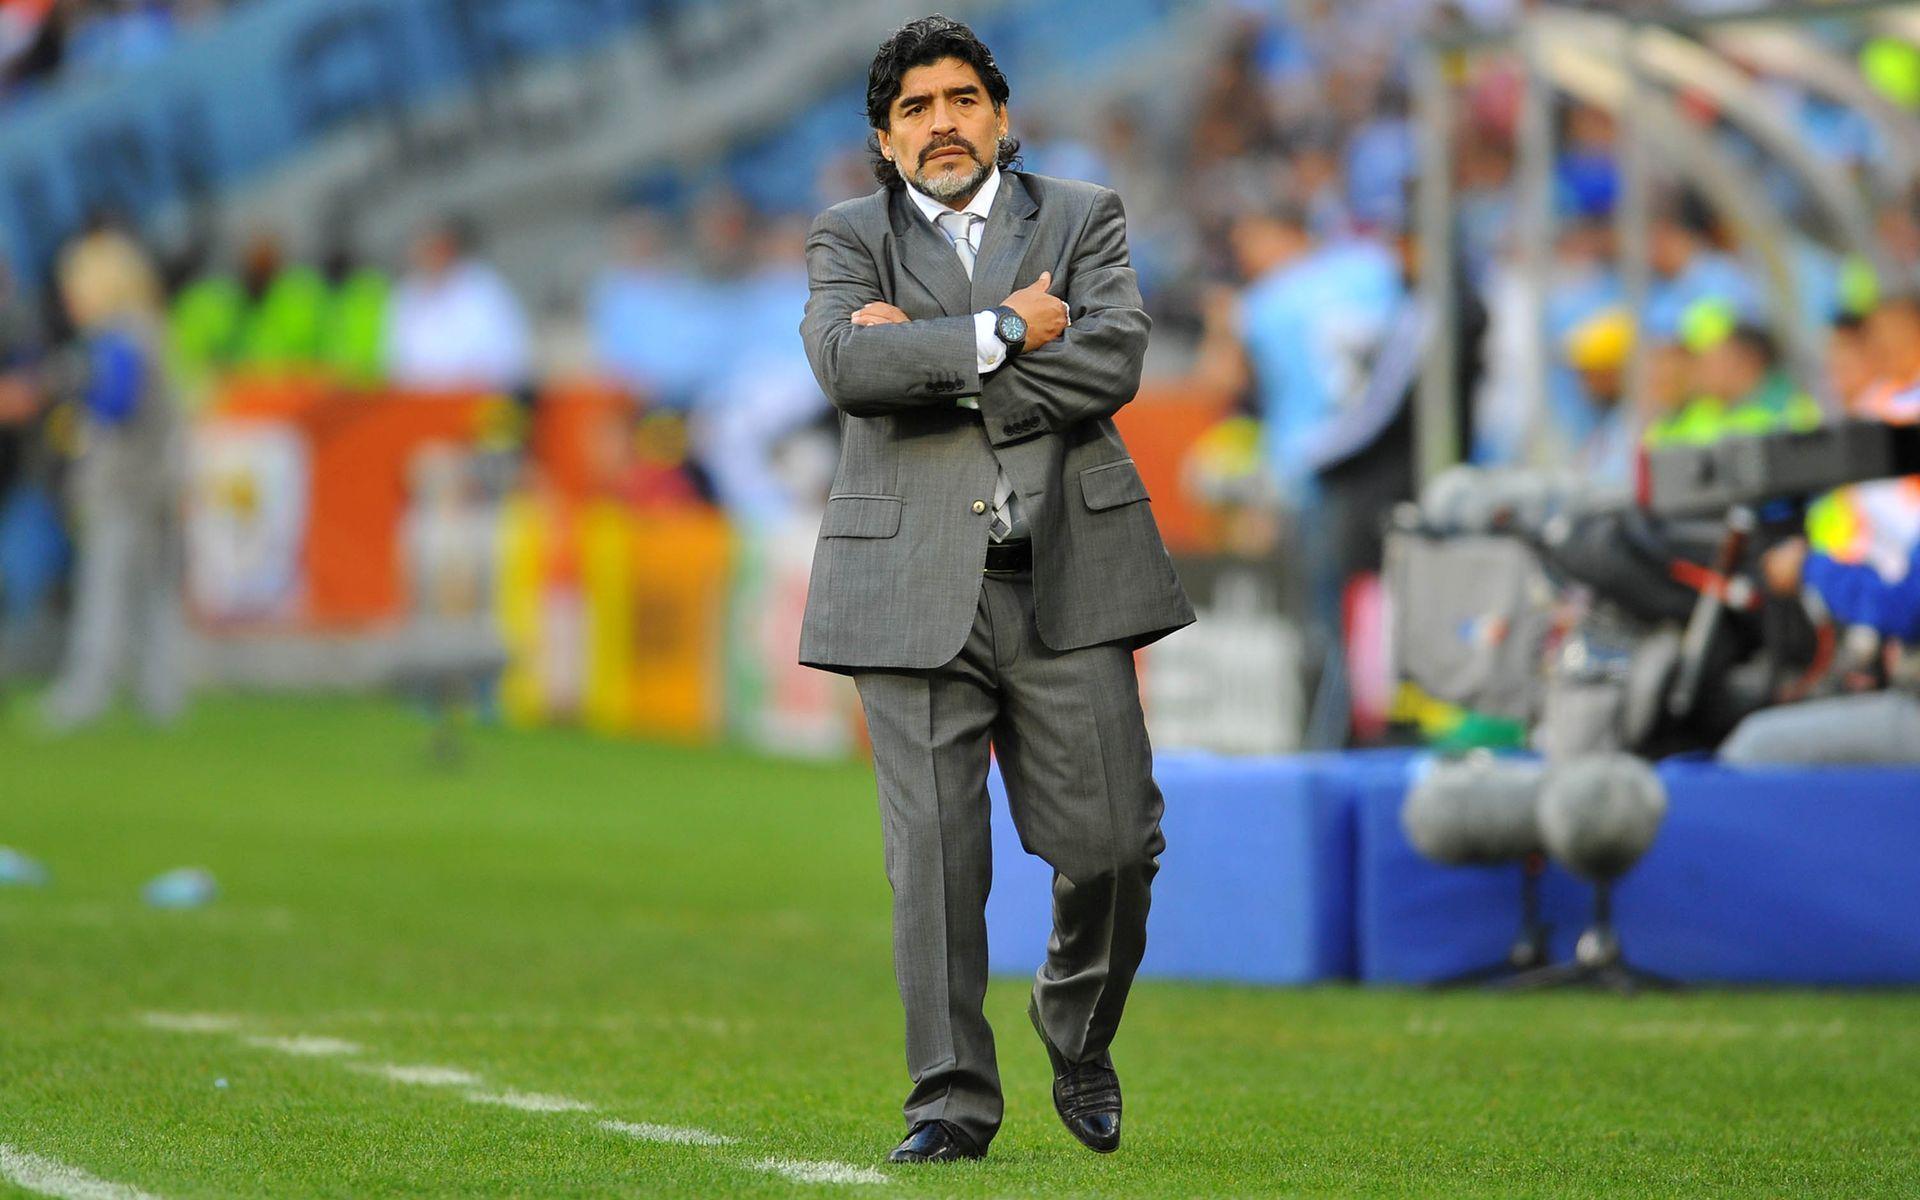 Diego Maradona free Wallpaper (2 photo) for your desktop